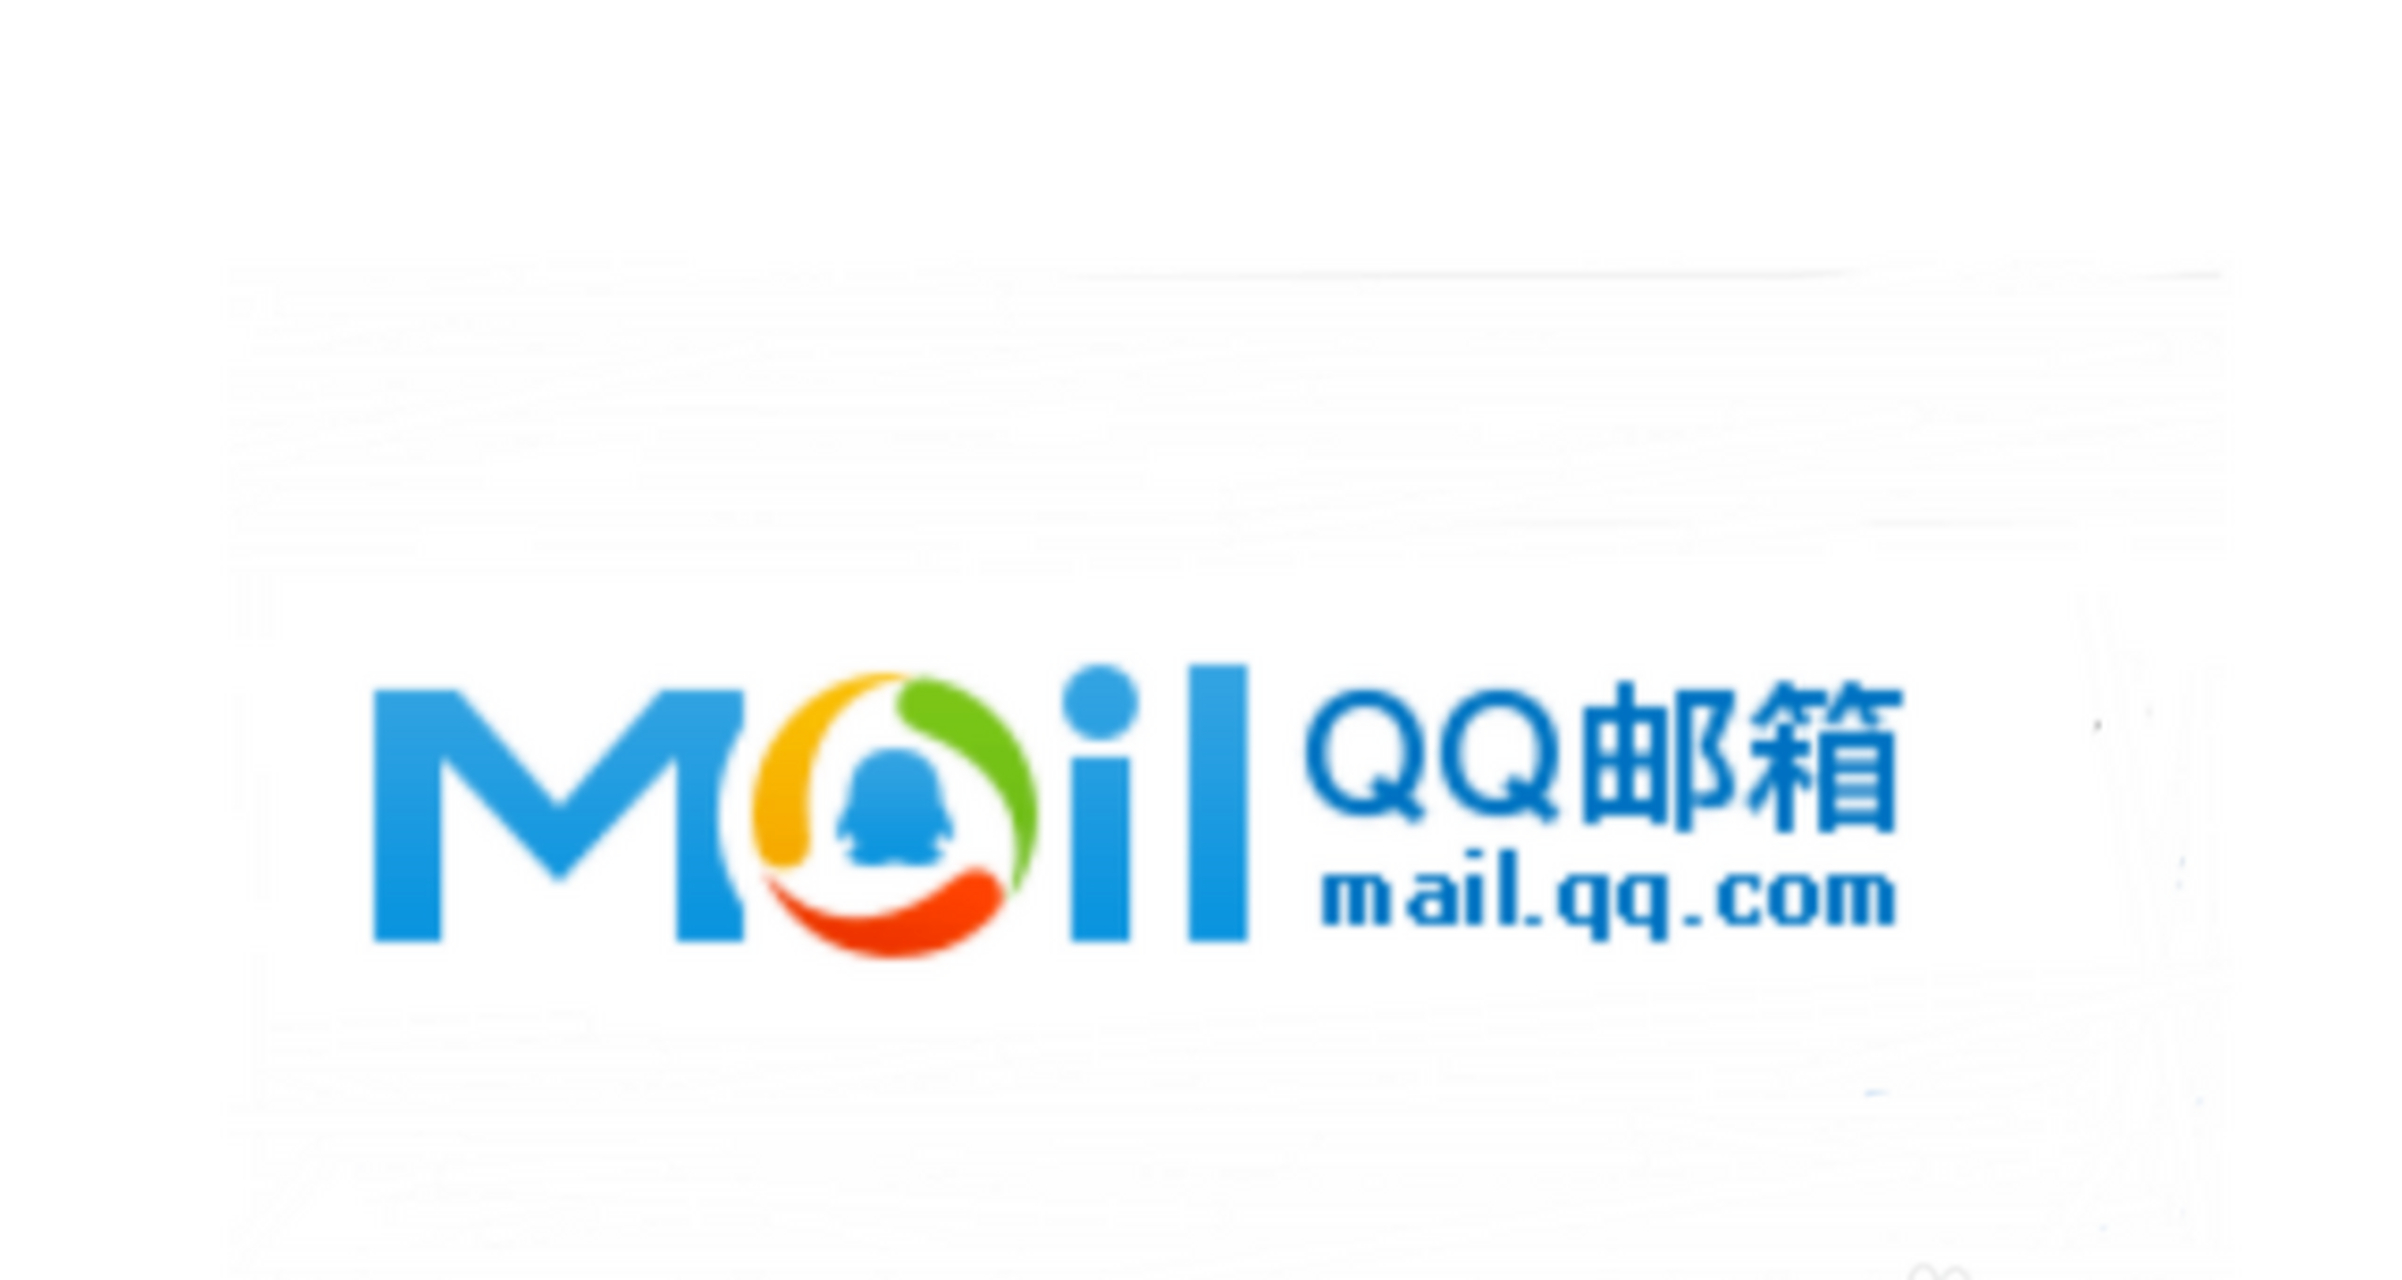 qq邮箱logo图片